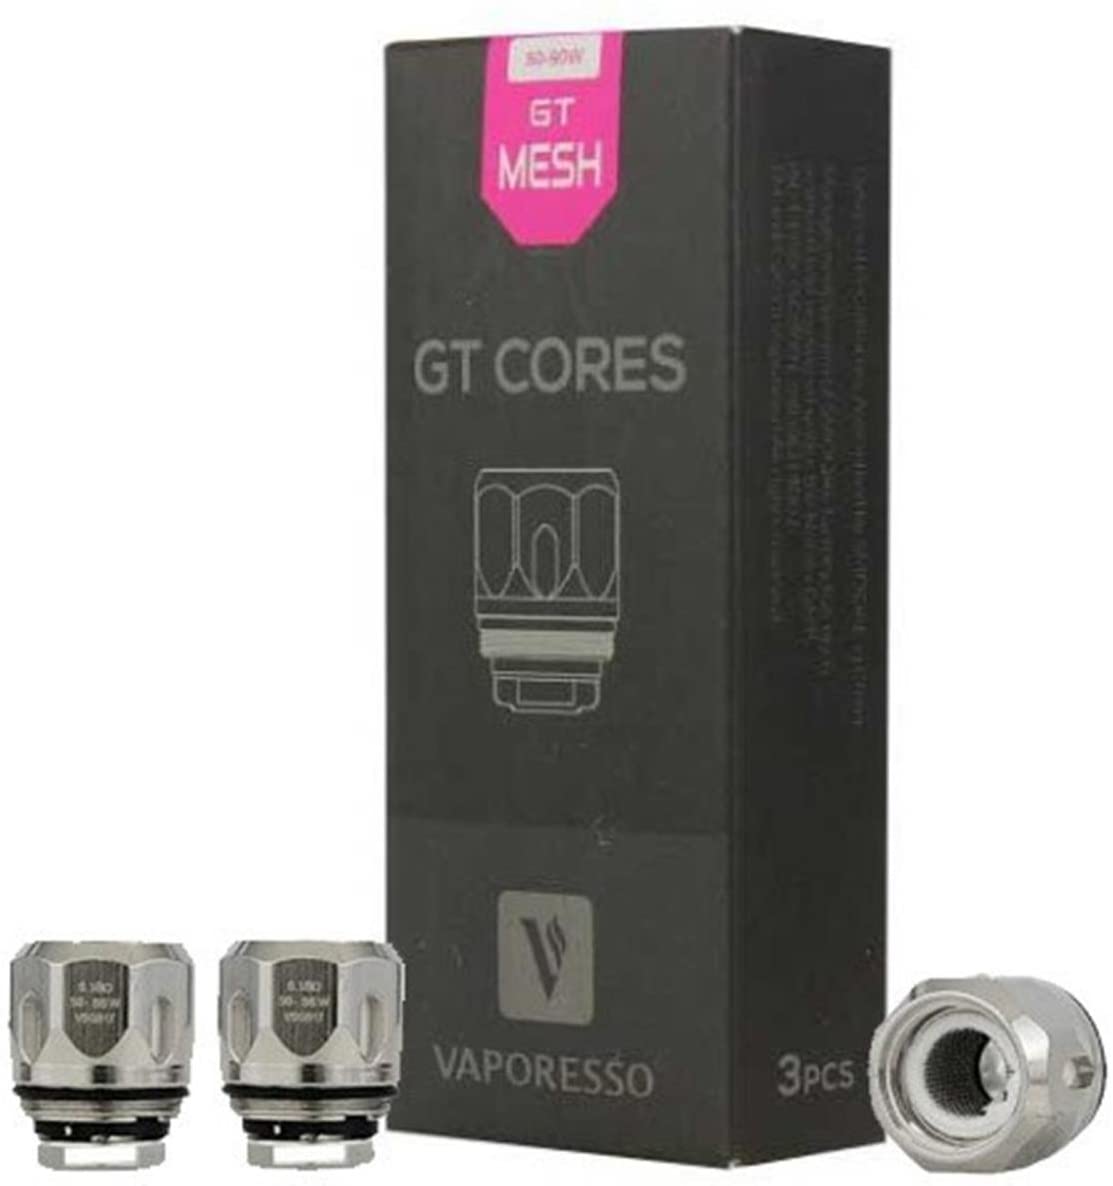 Vaporesso - GT Core Coils - OB Vape Shop Ireland | Free Next Day Delivery Over €50 | OB Vape Ireland's Premier Vape Shop | OB Bar Disposable Vape